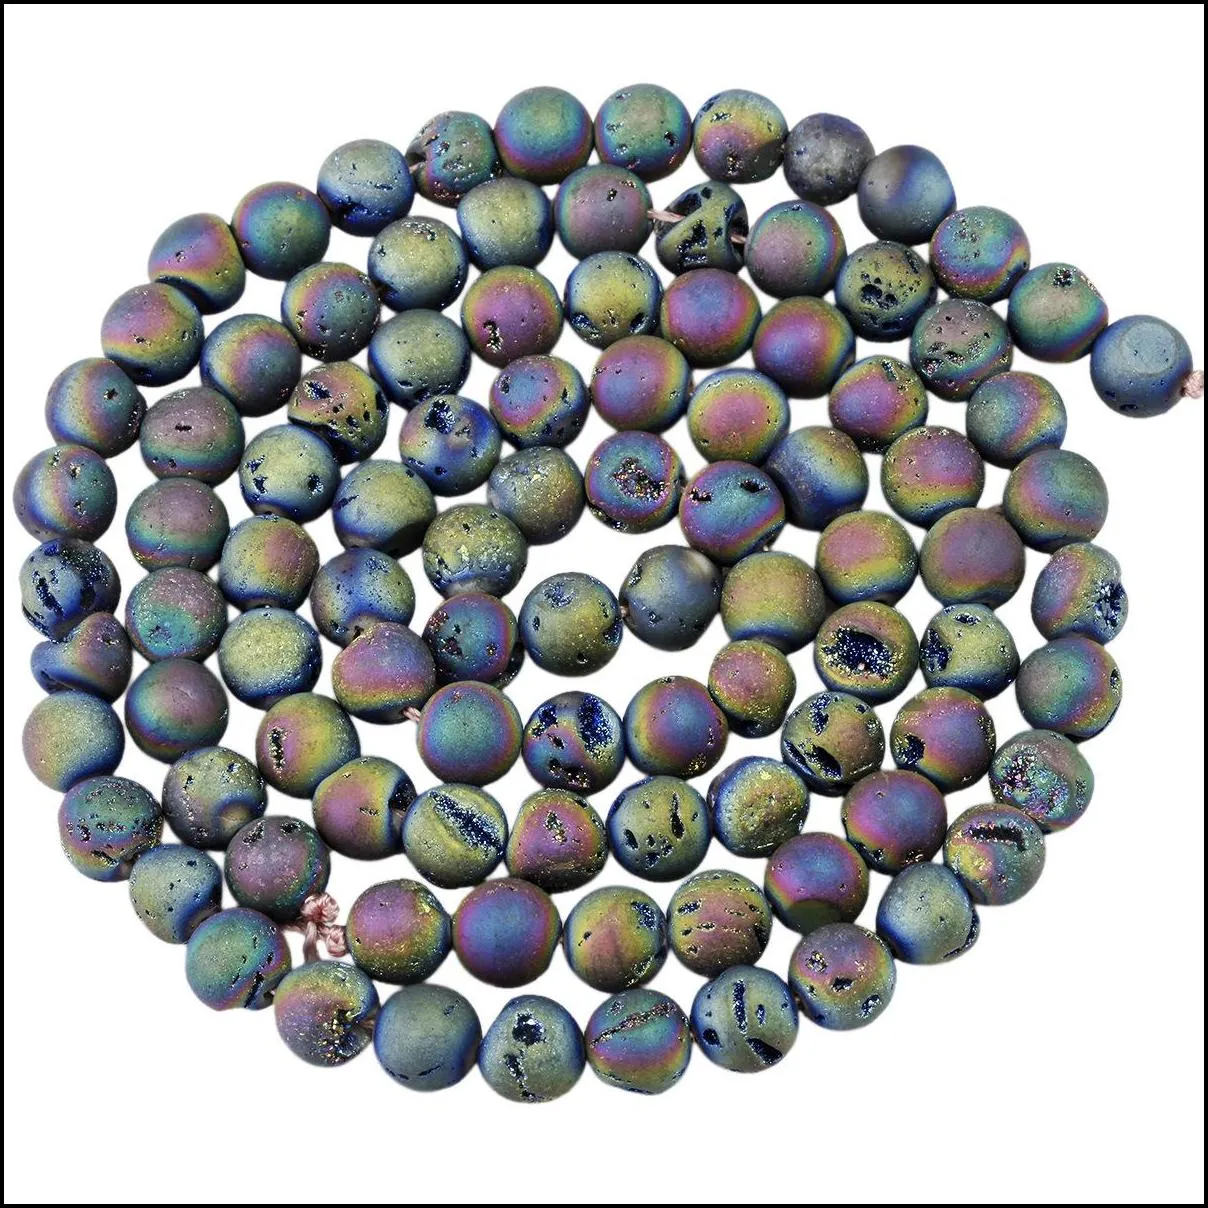 10mm druzy agate crystal round beads 38pcs dursy quartz organic gemstone spherical energy stone healing power for jewelry bracelet mala necklace making 1